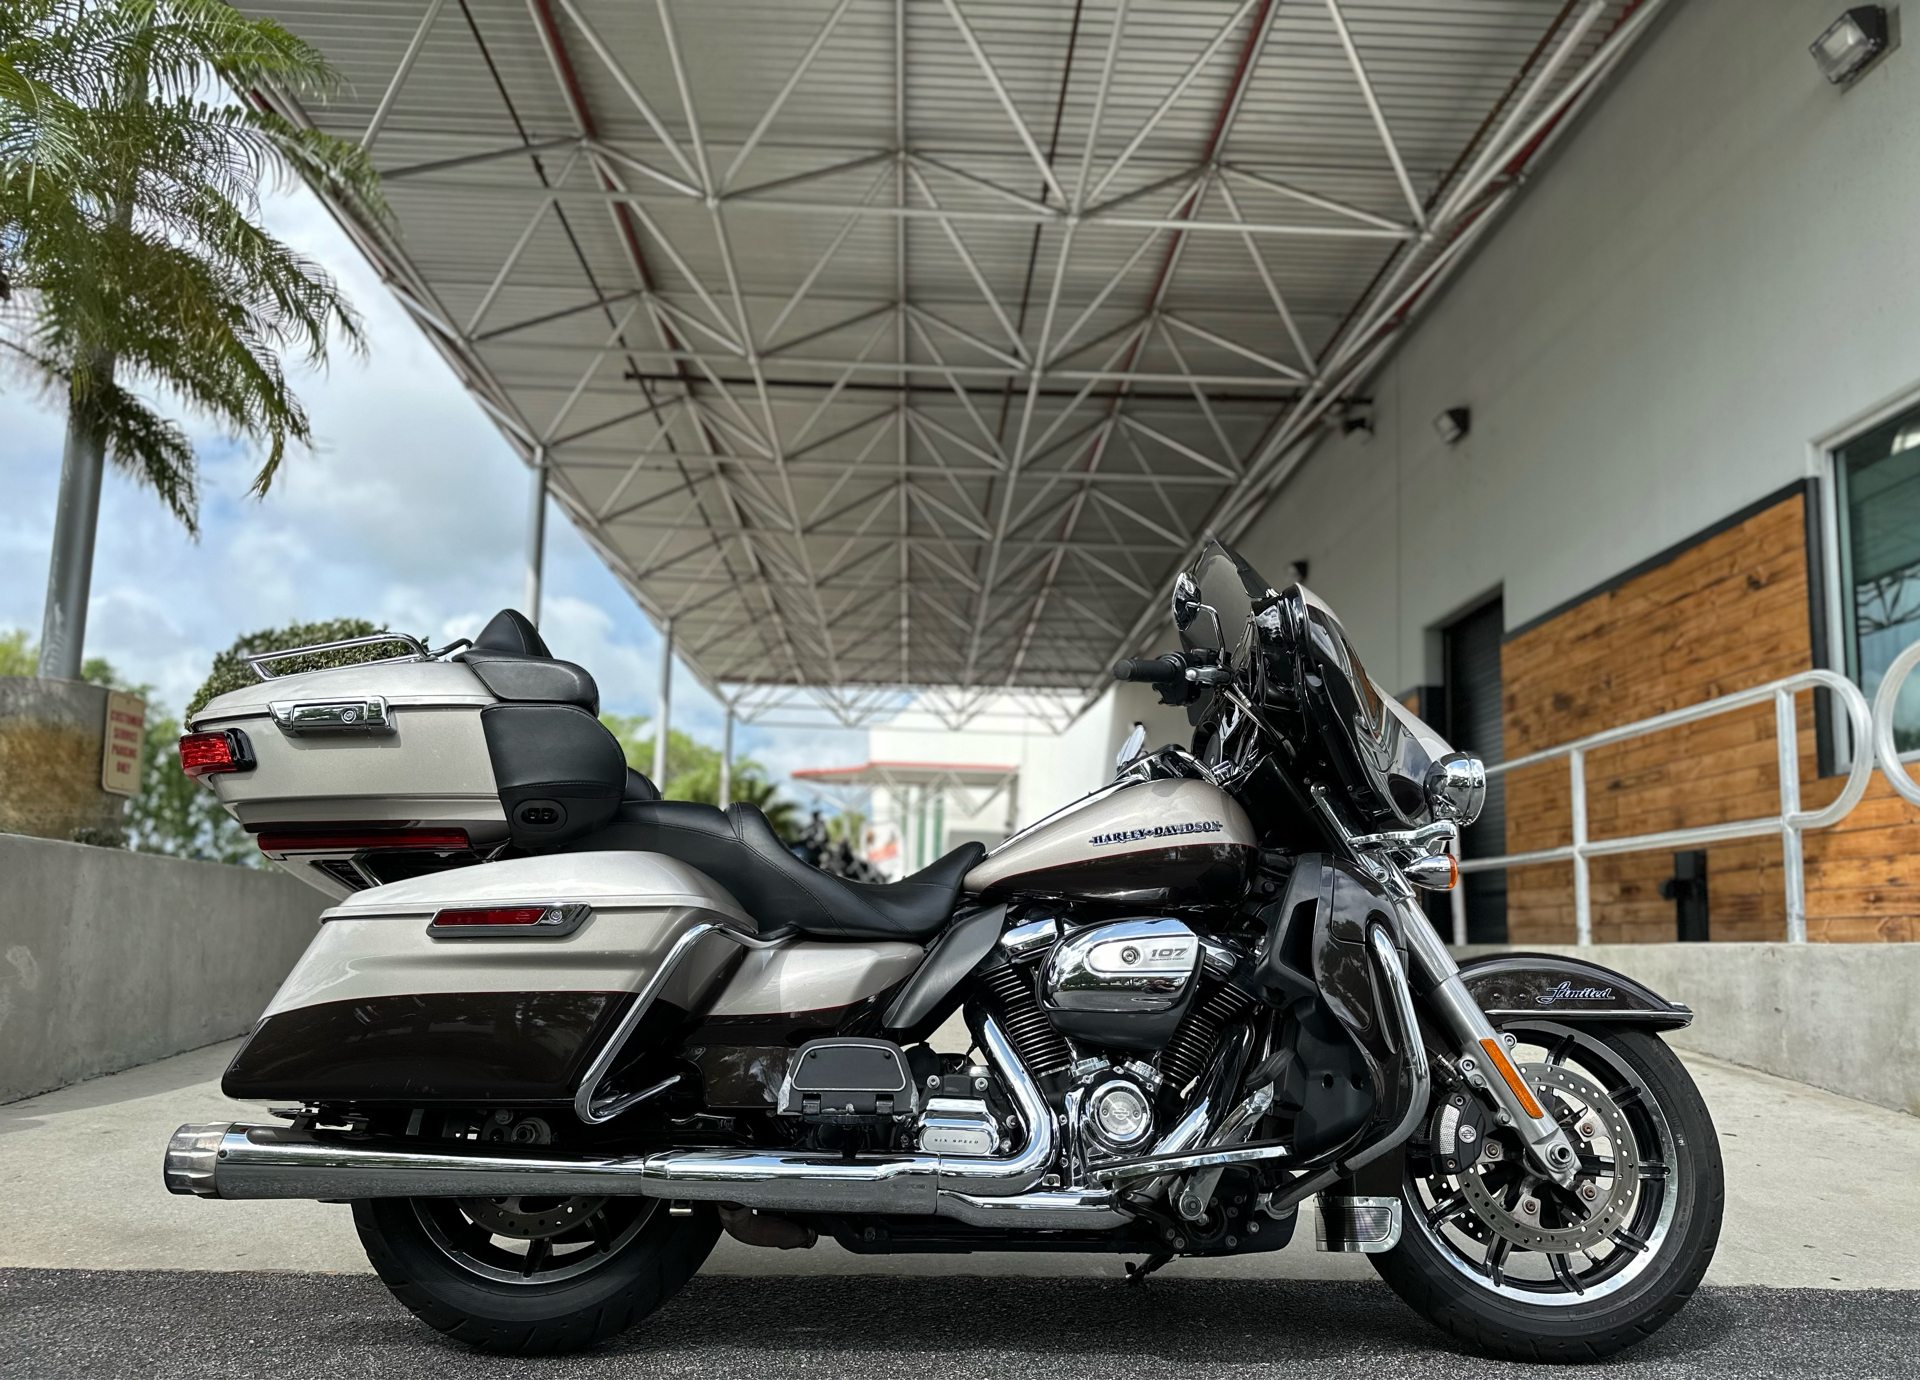 2018 Harley-Davidson Ultra Limited in Sanford, Florida - Photo 1